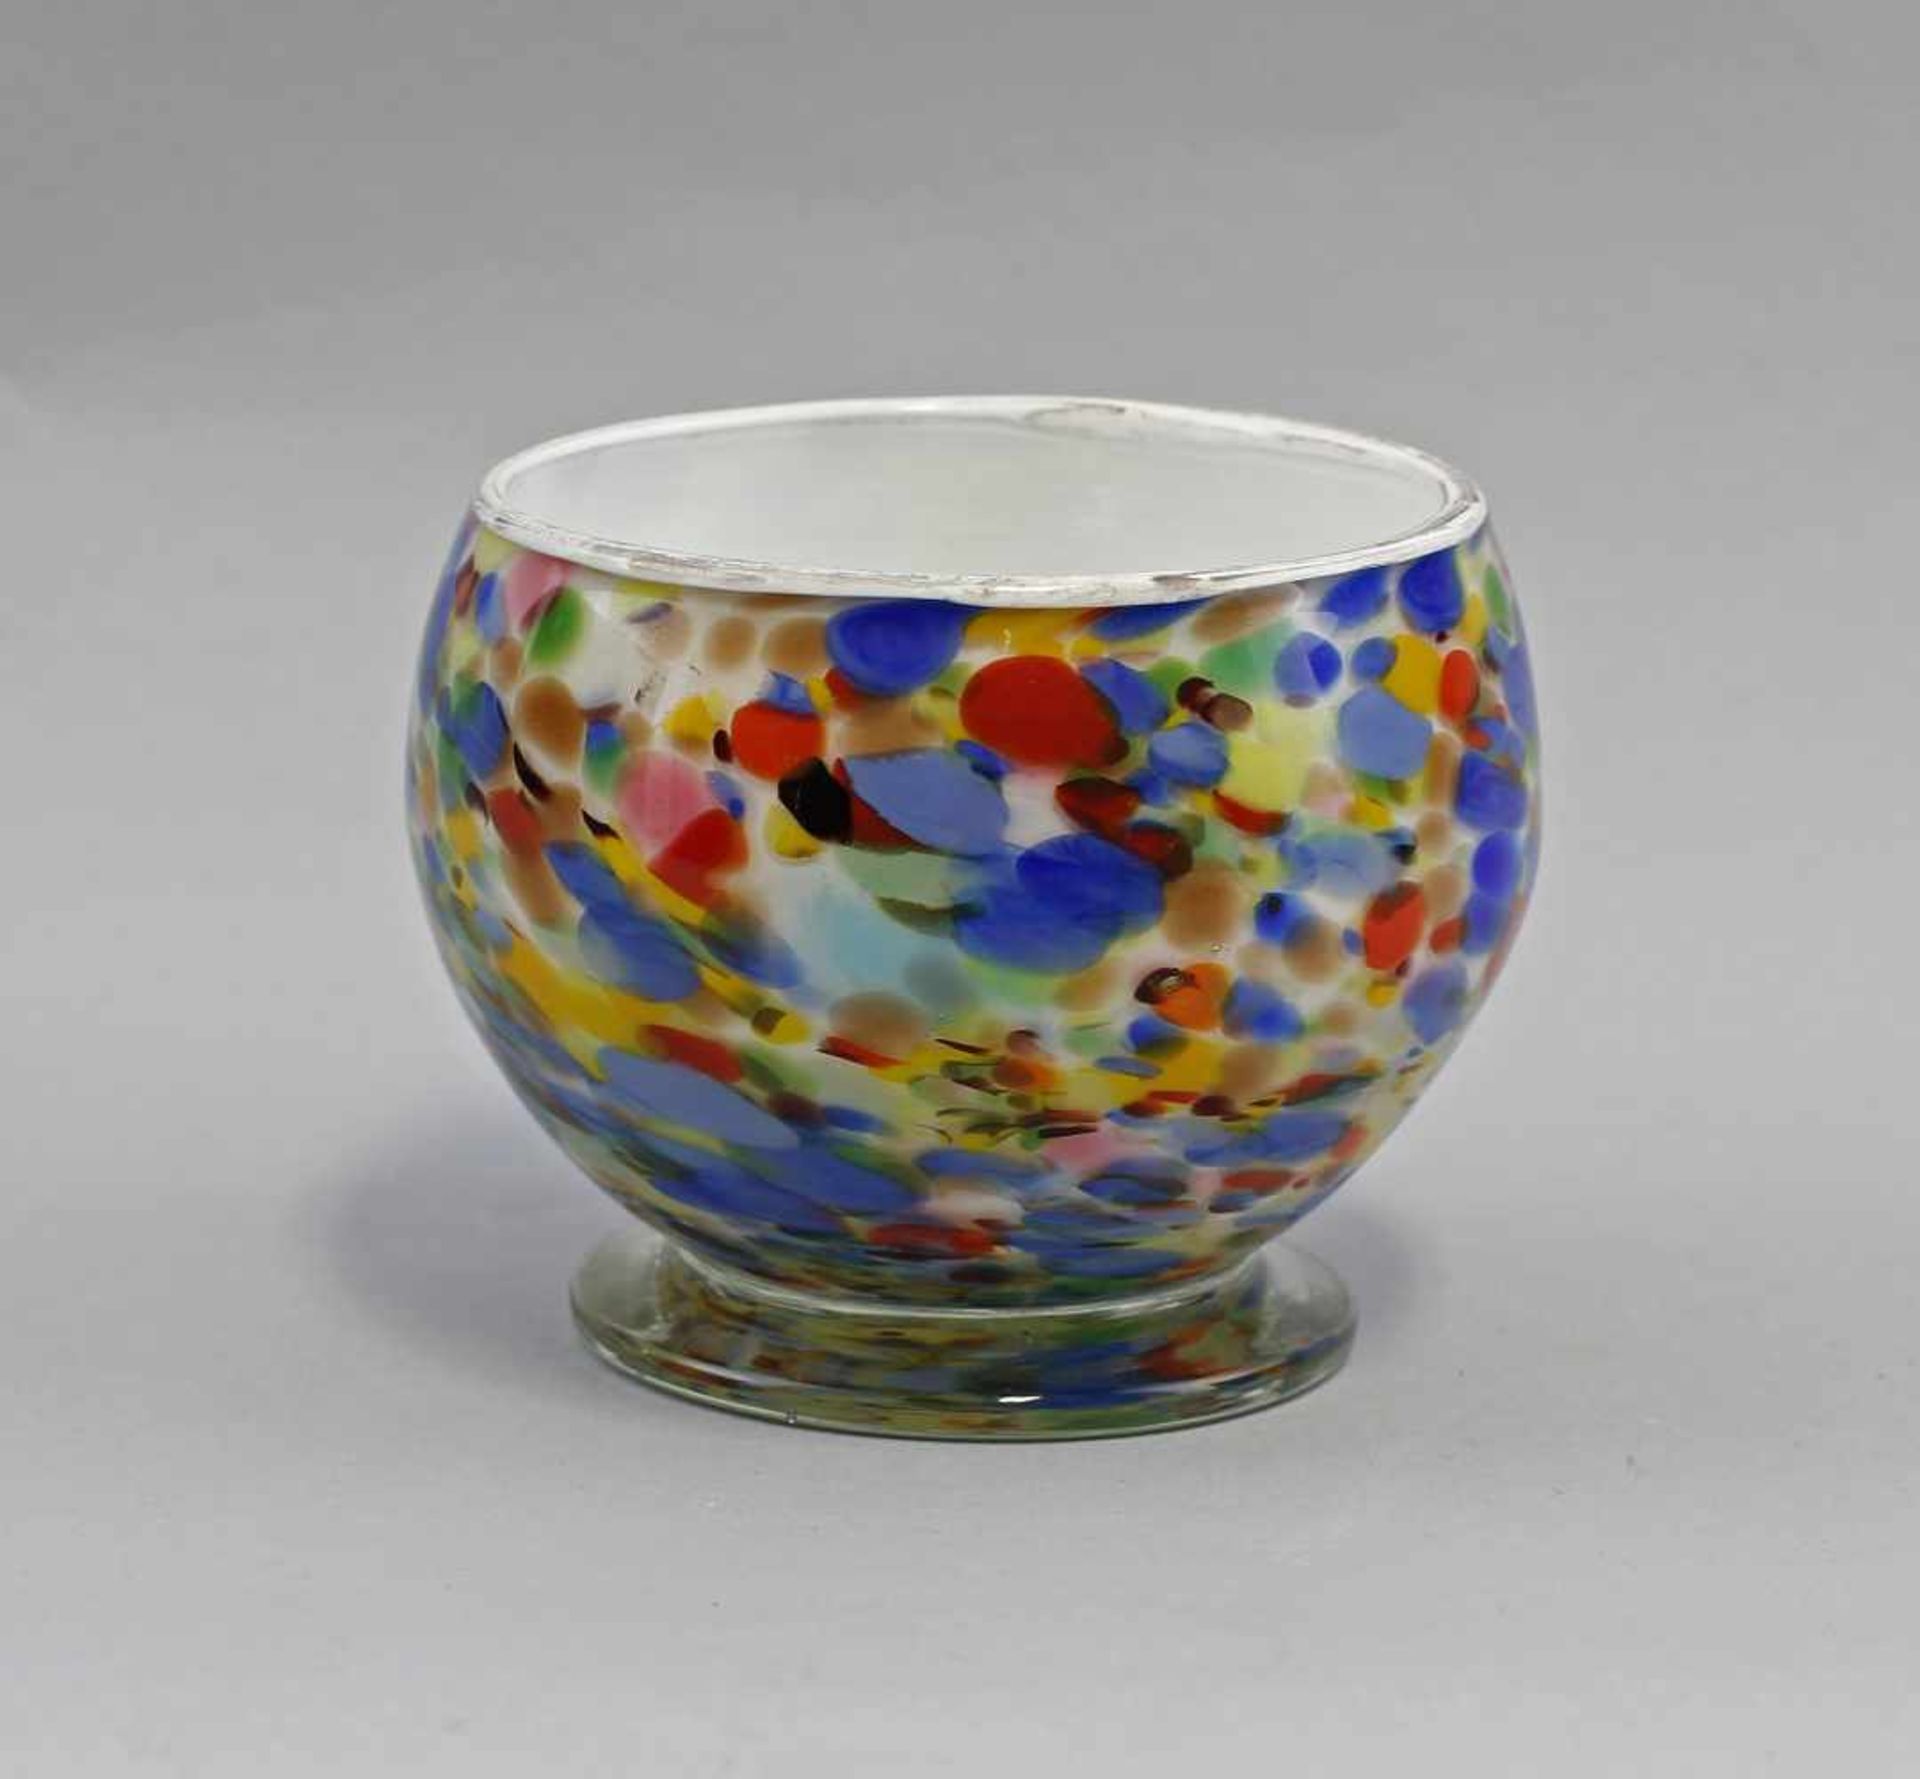 Bunte Vase / Schale: wohl 19. Jh. farbloses Glas, weiß unterfangen, bunte fleckige